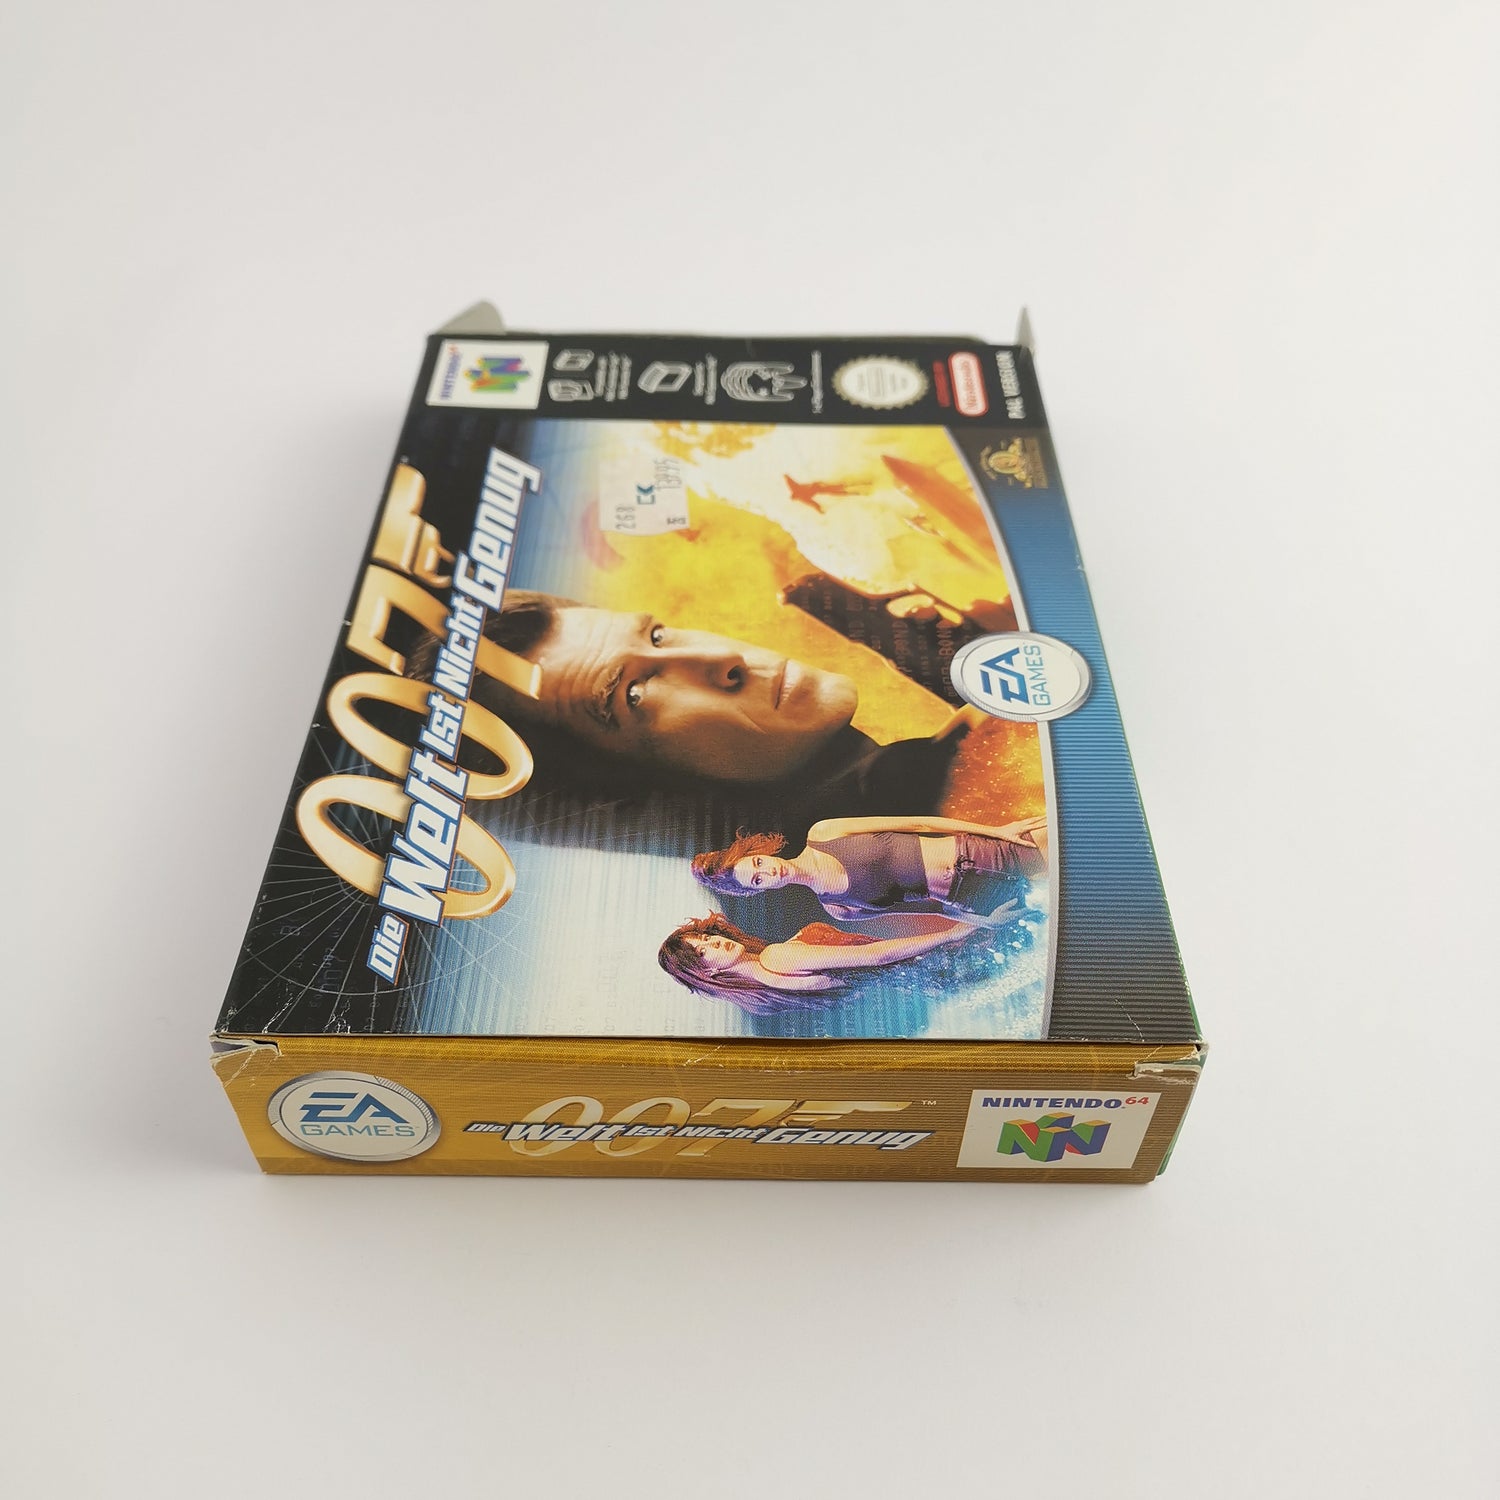 Nintendo 64 Game: 007 The World Is Not Enough James Bond | N64 OVP PAL USK18